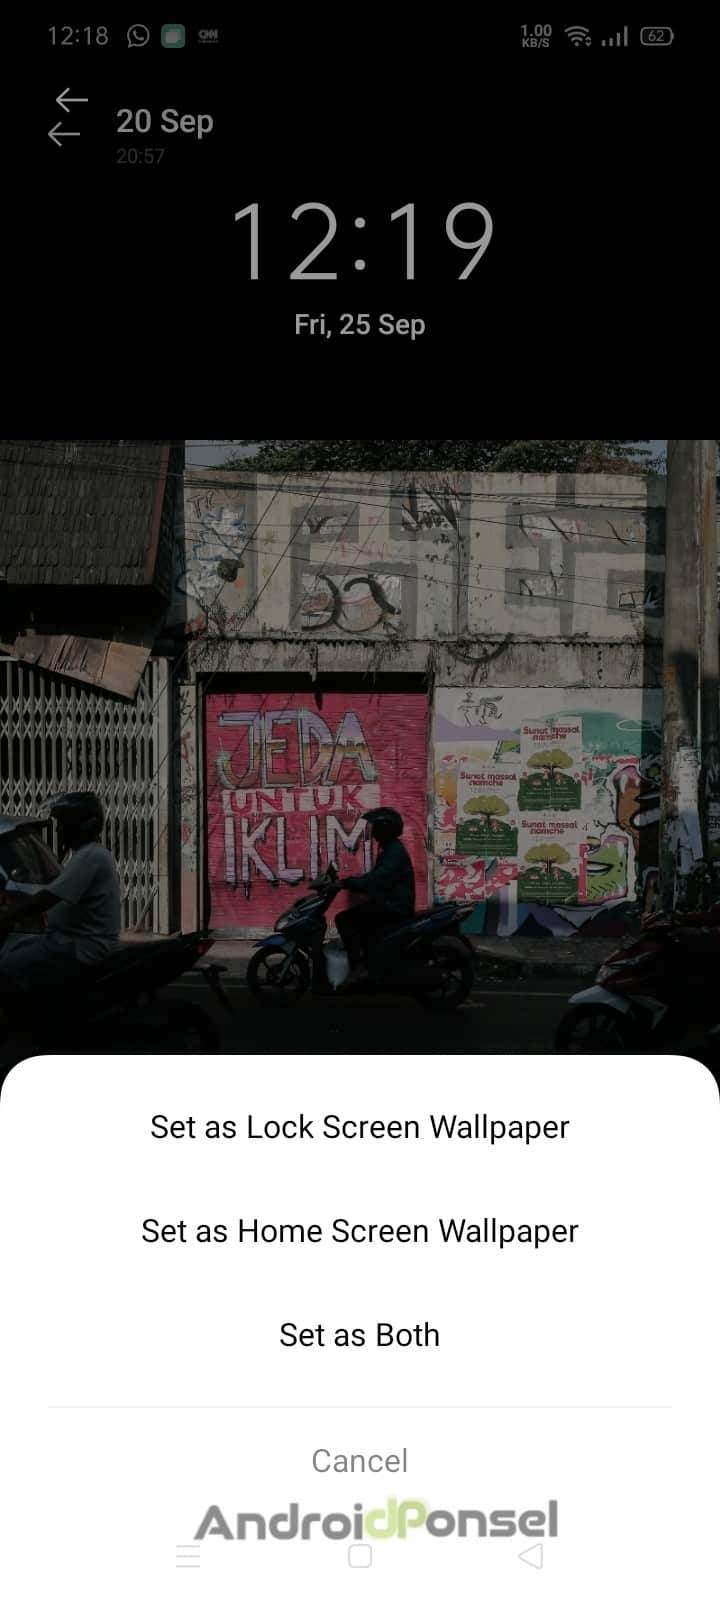 Cara Ganti Background Foto di HP Android